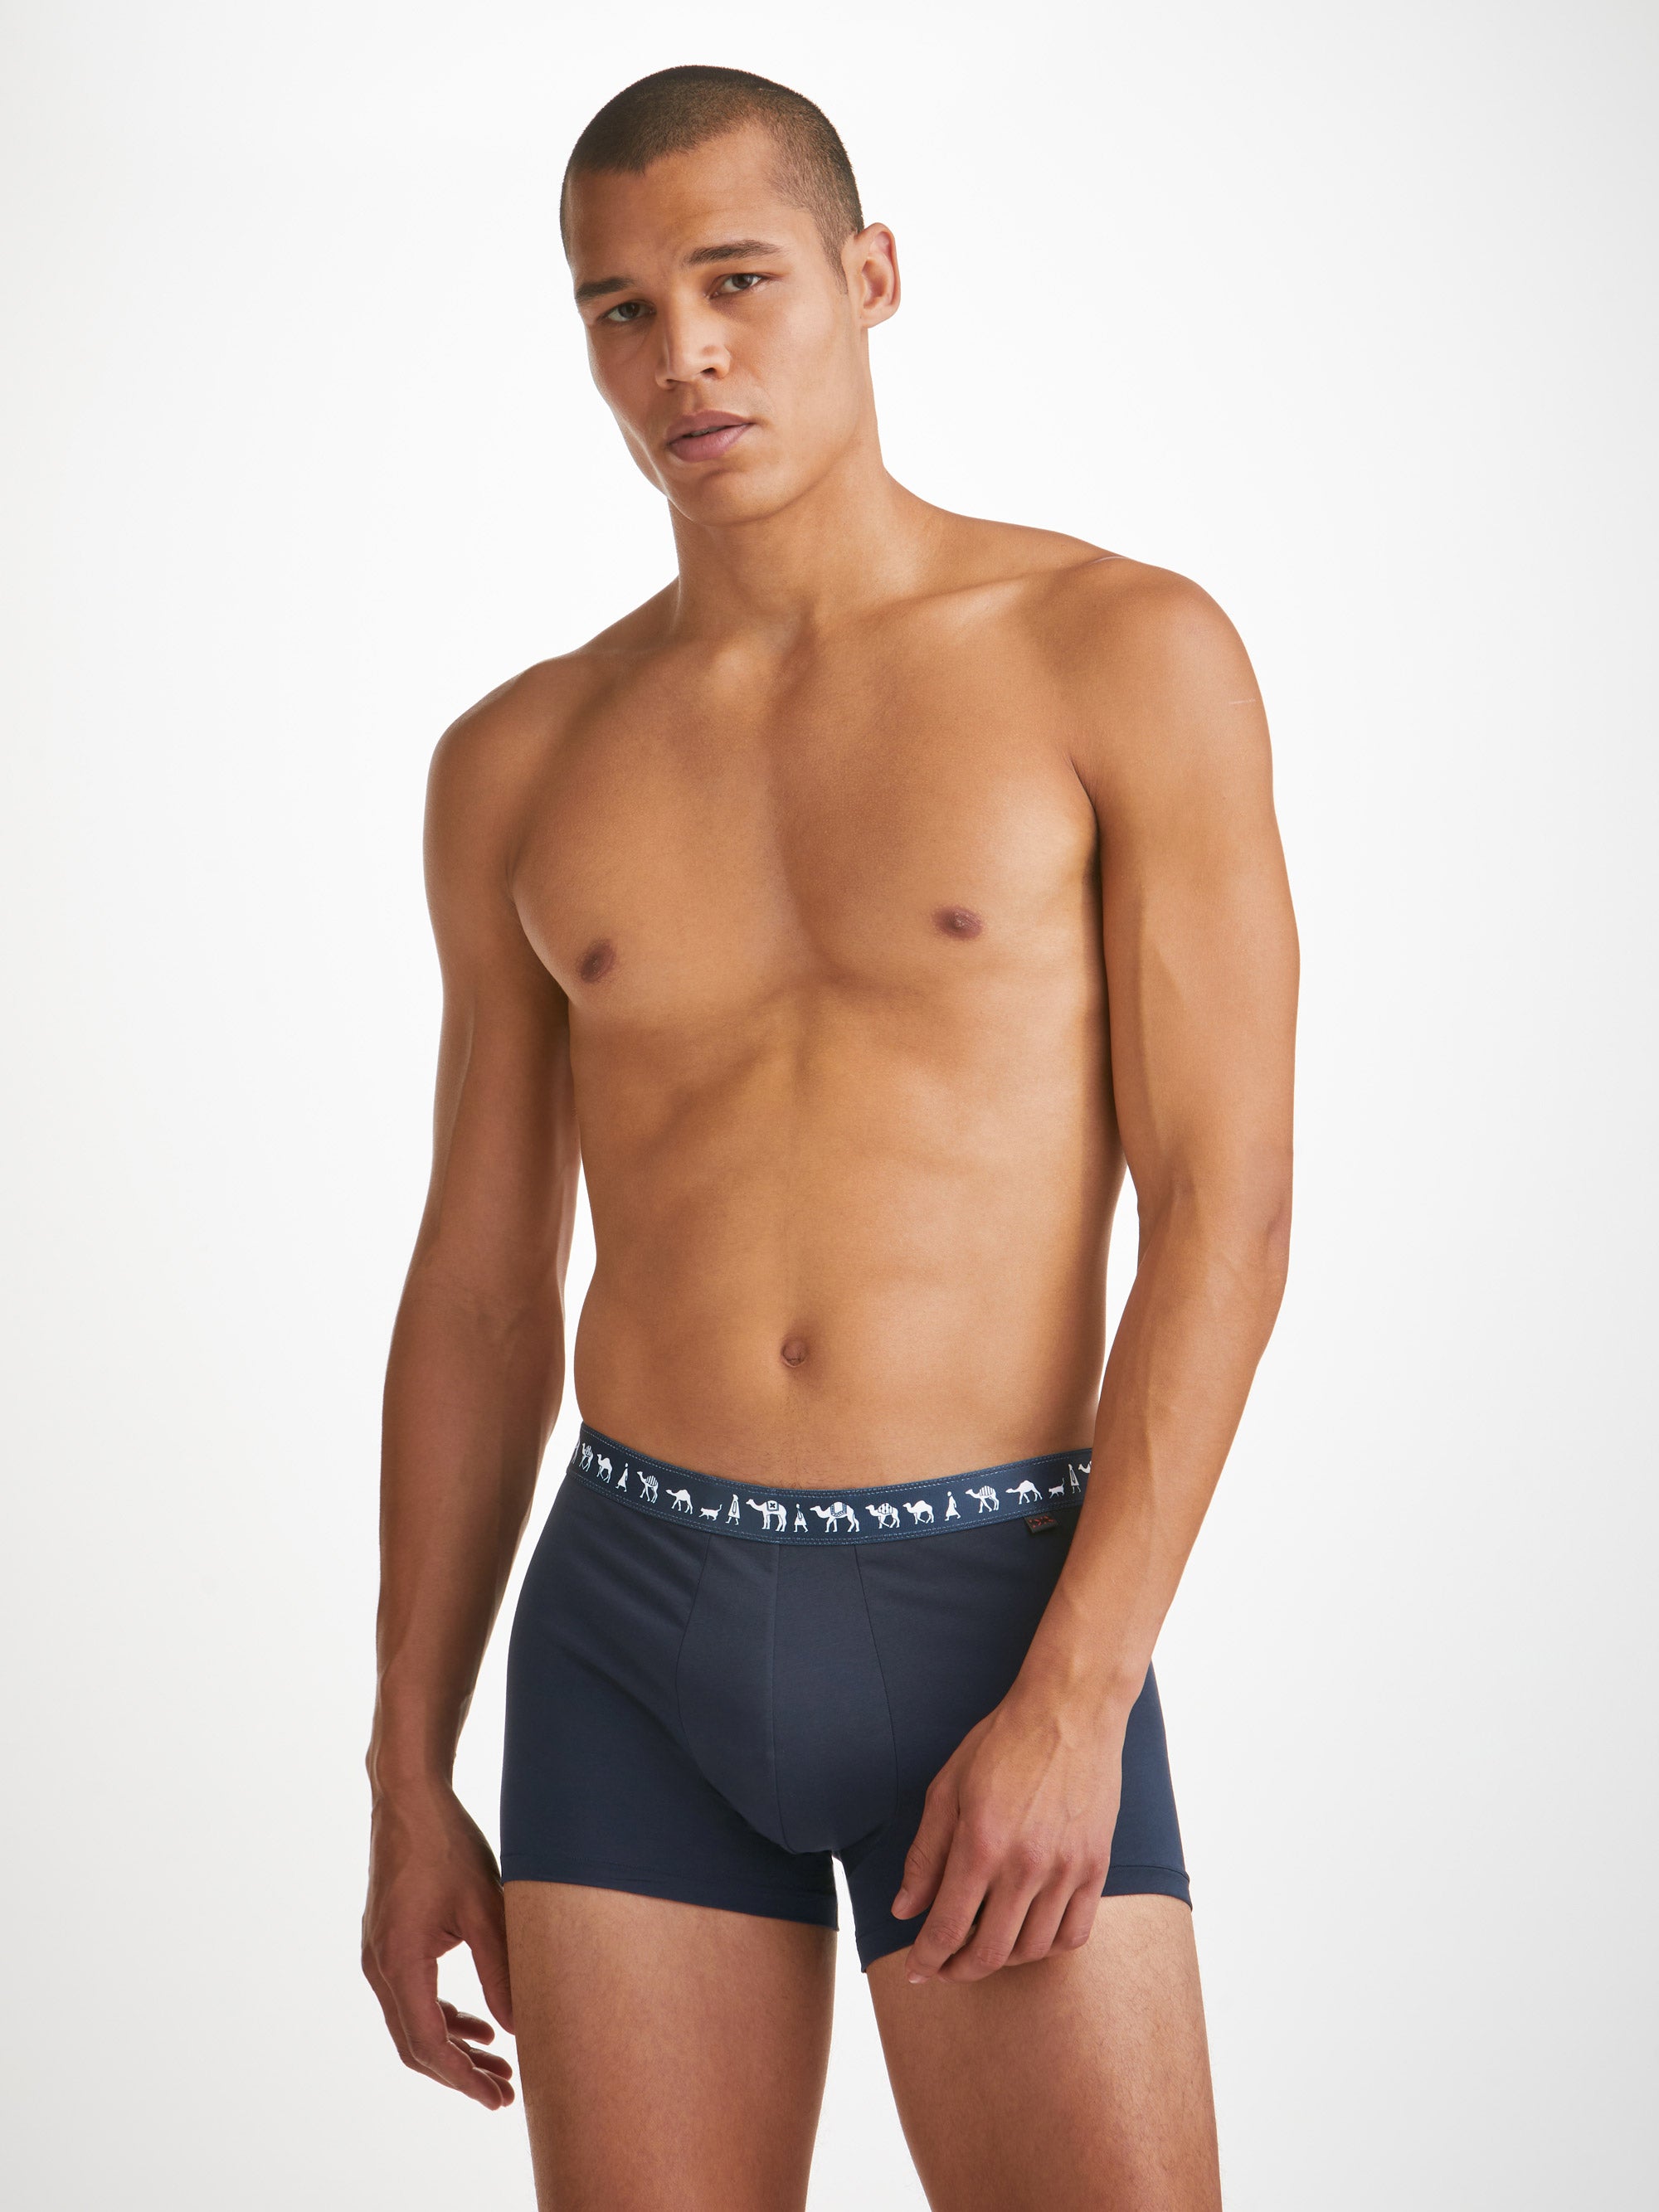 Best Men's Underwear: Innovative Men's Shopping